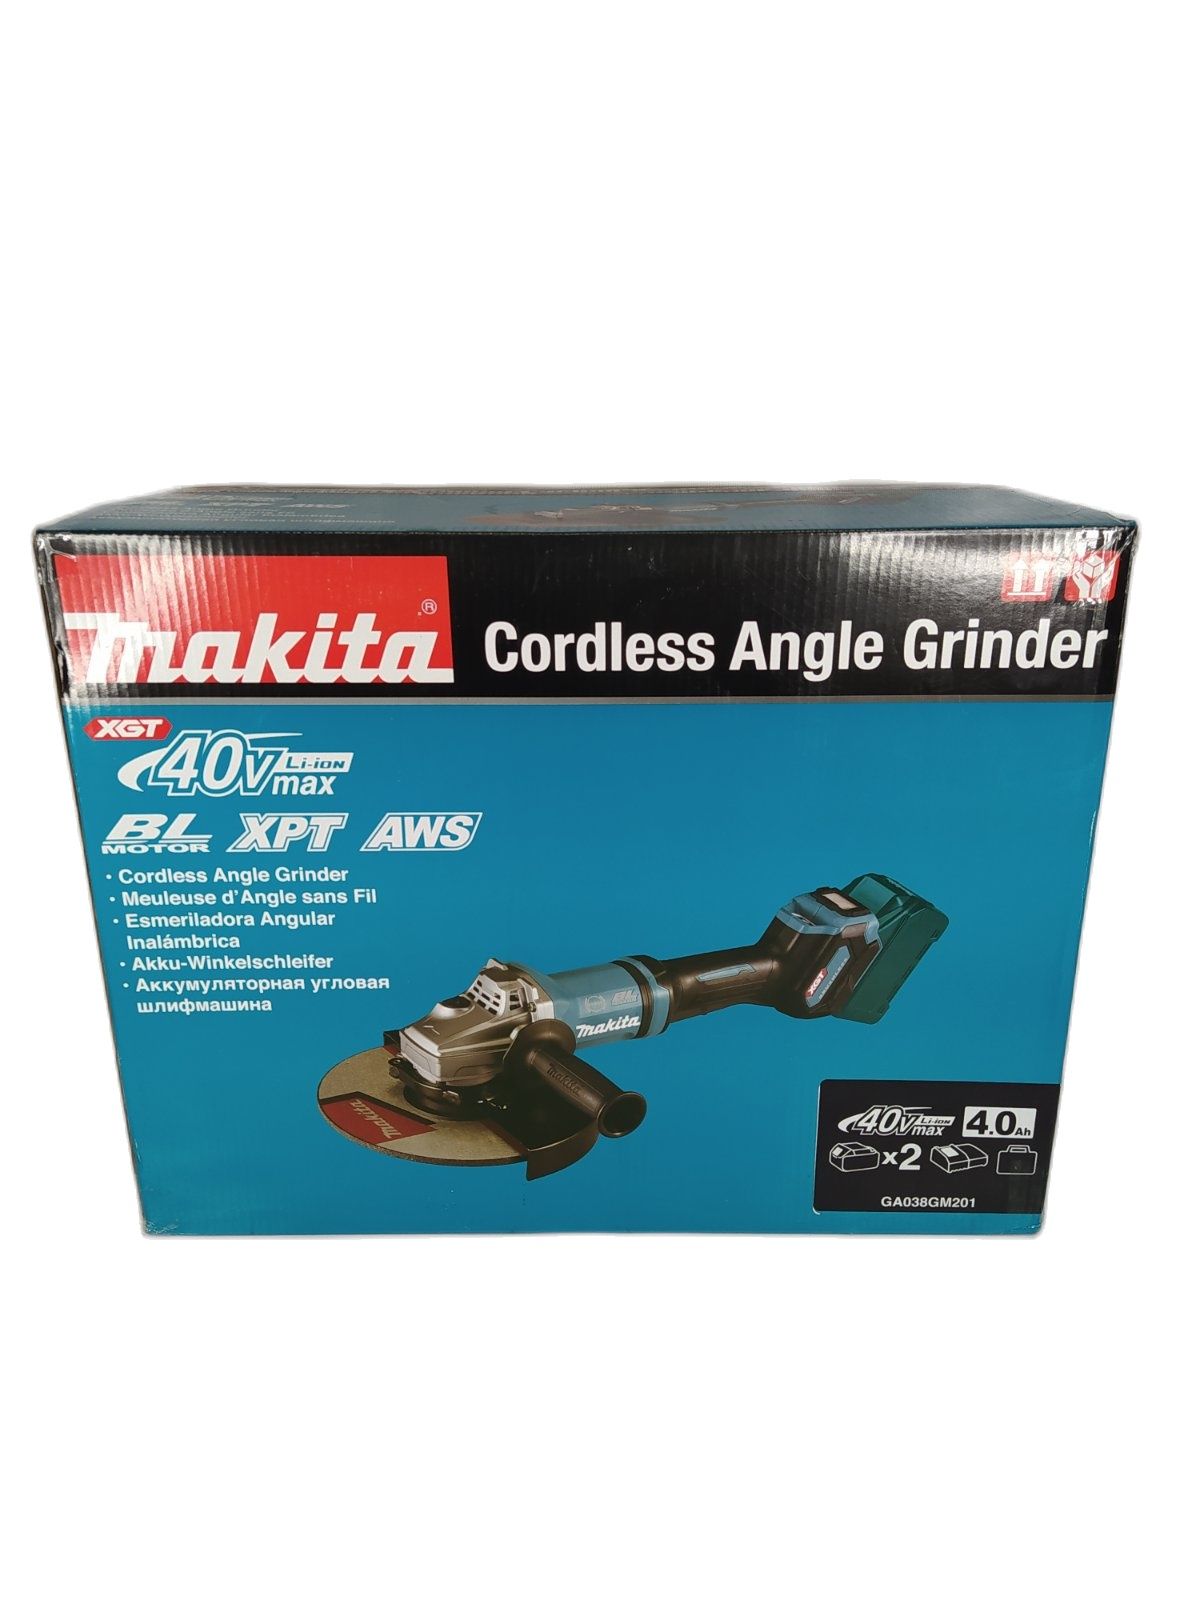 MAKITA GA038GM201 Brushless Cordless Angle Grinder, Large Trigger Switch 40Vmax XGT™ Li-ion [Kit] (7″)